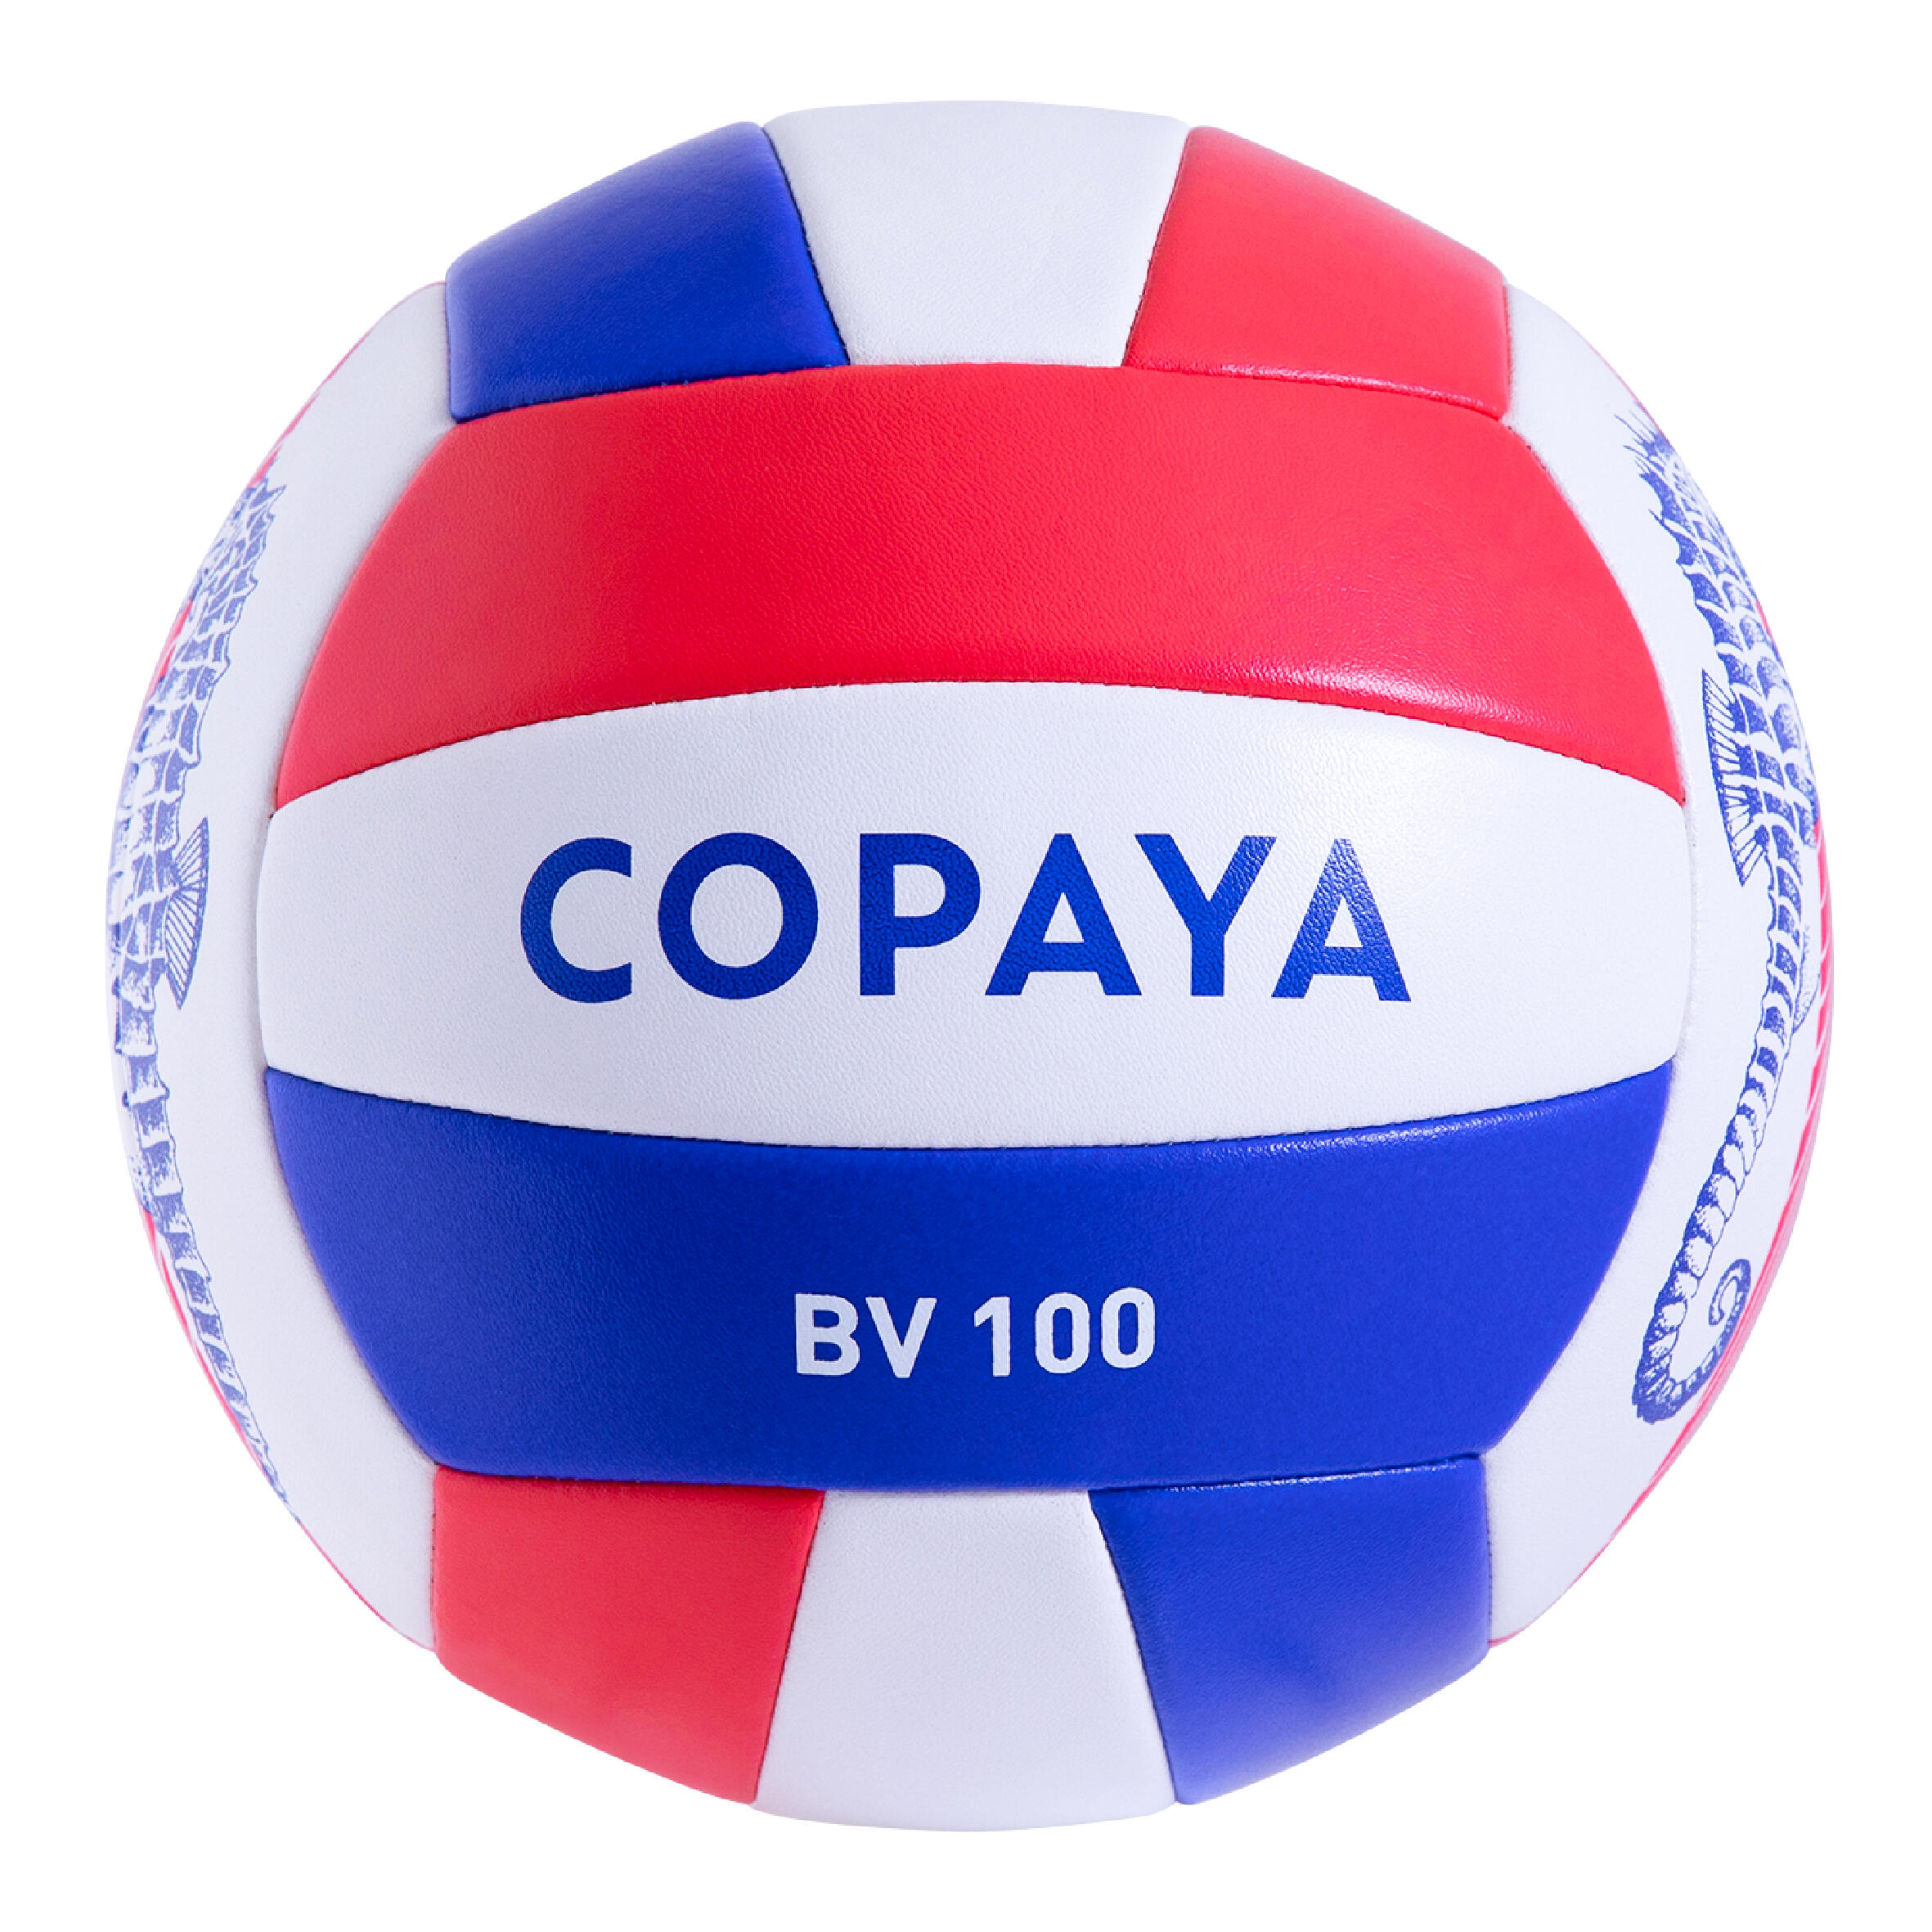 COPAYA Beach Volleyball BVBS100 - Coral